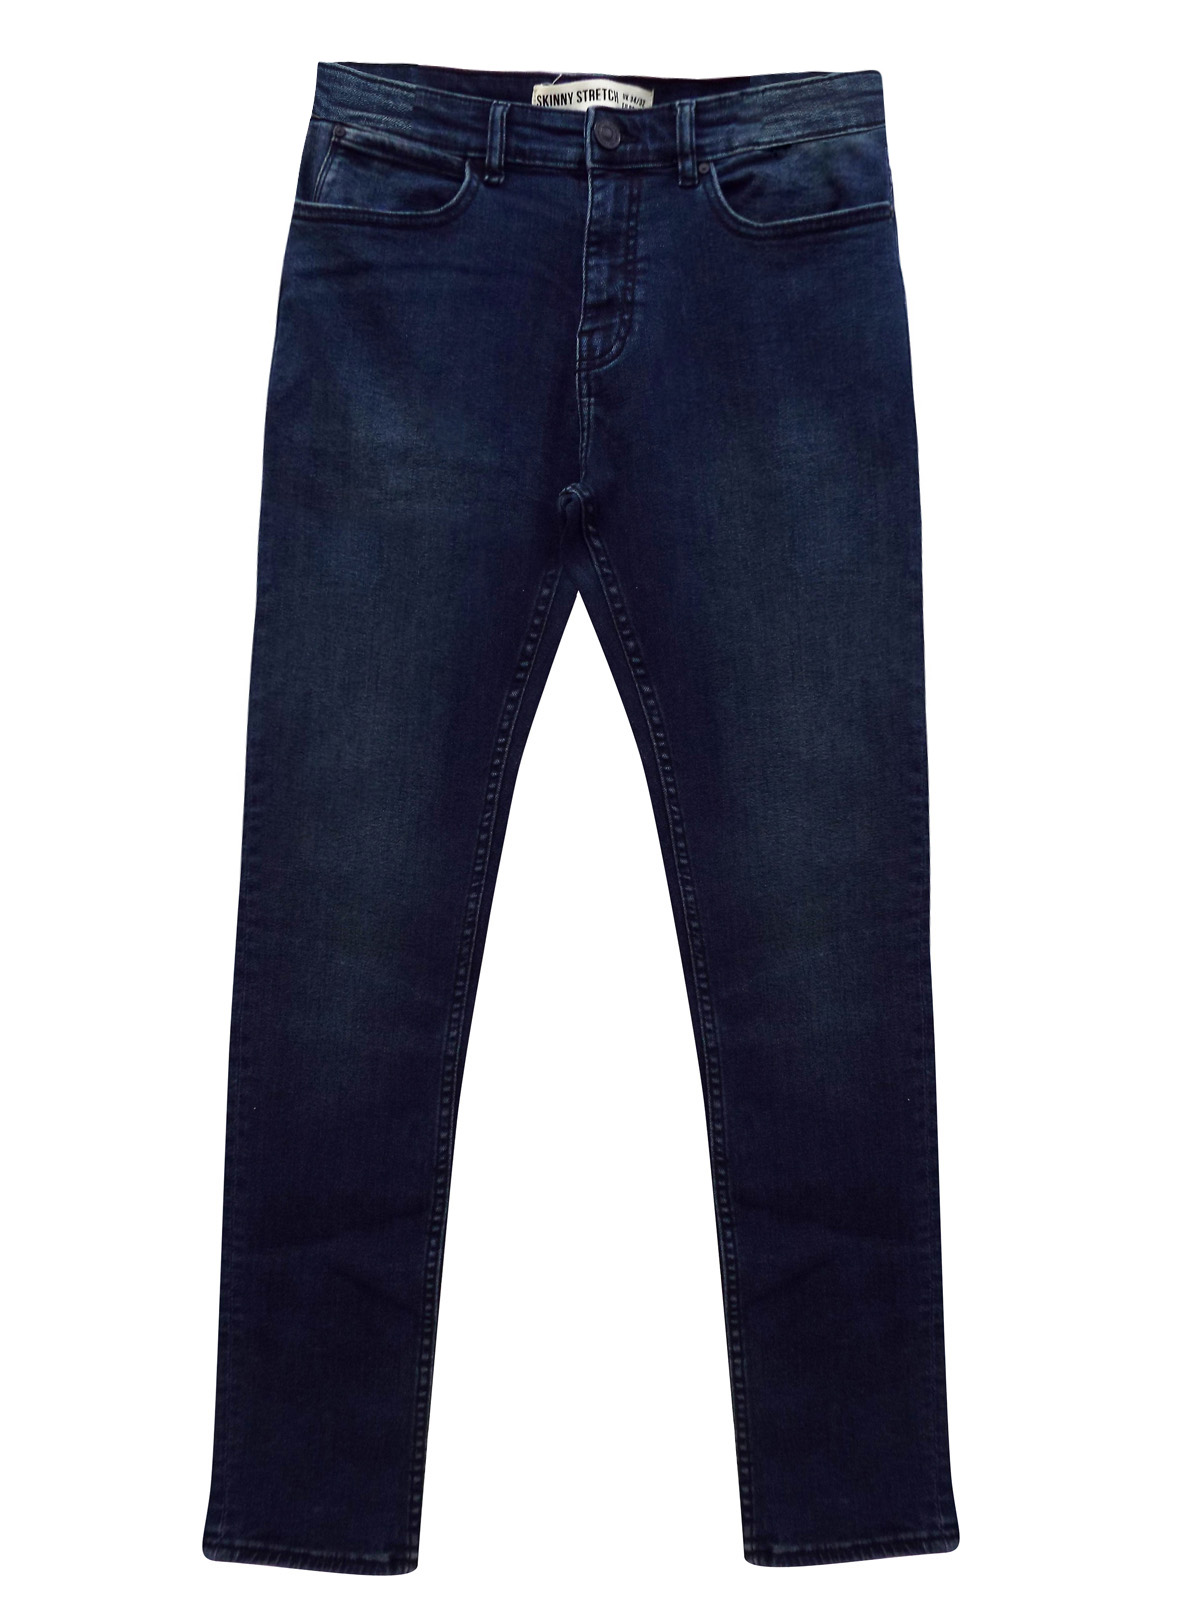 N3w L00k Mens BLUE BLACK Skinny Jeans - Waist Size 28 to 36